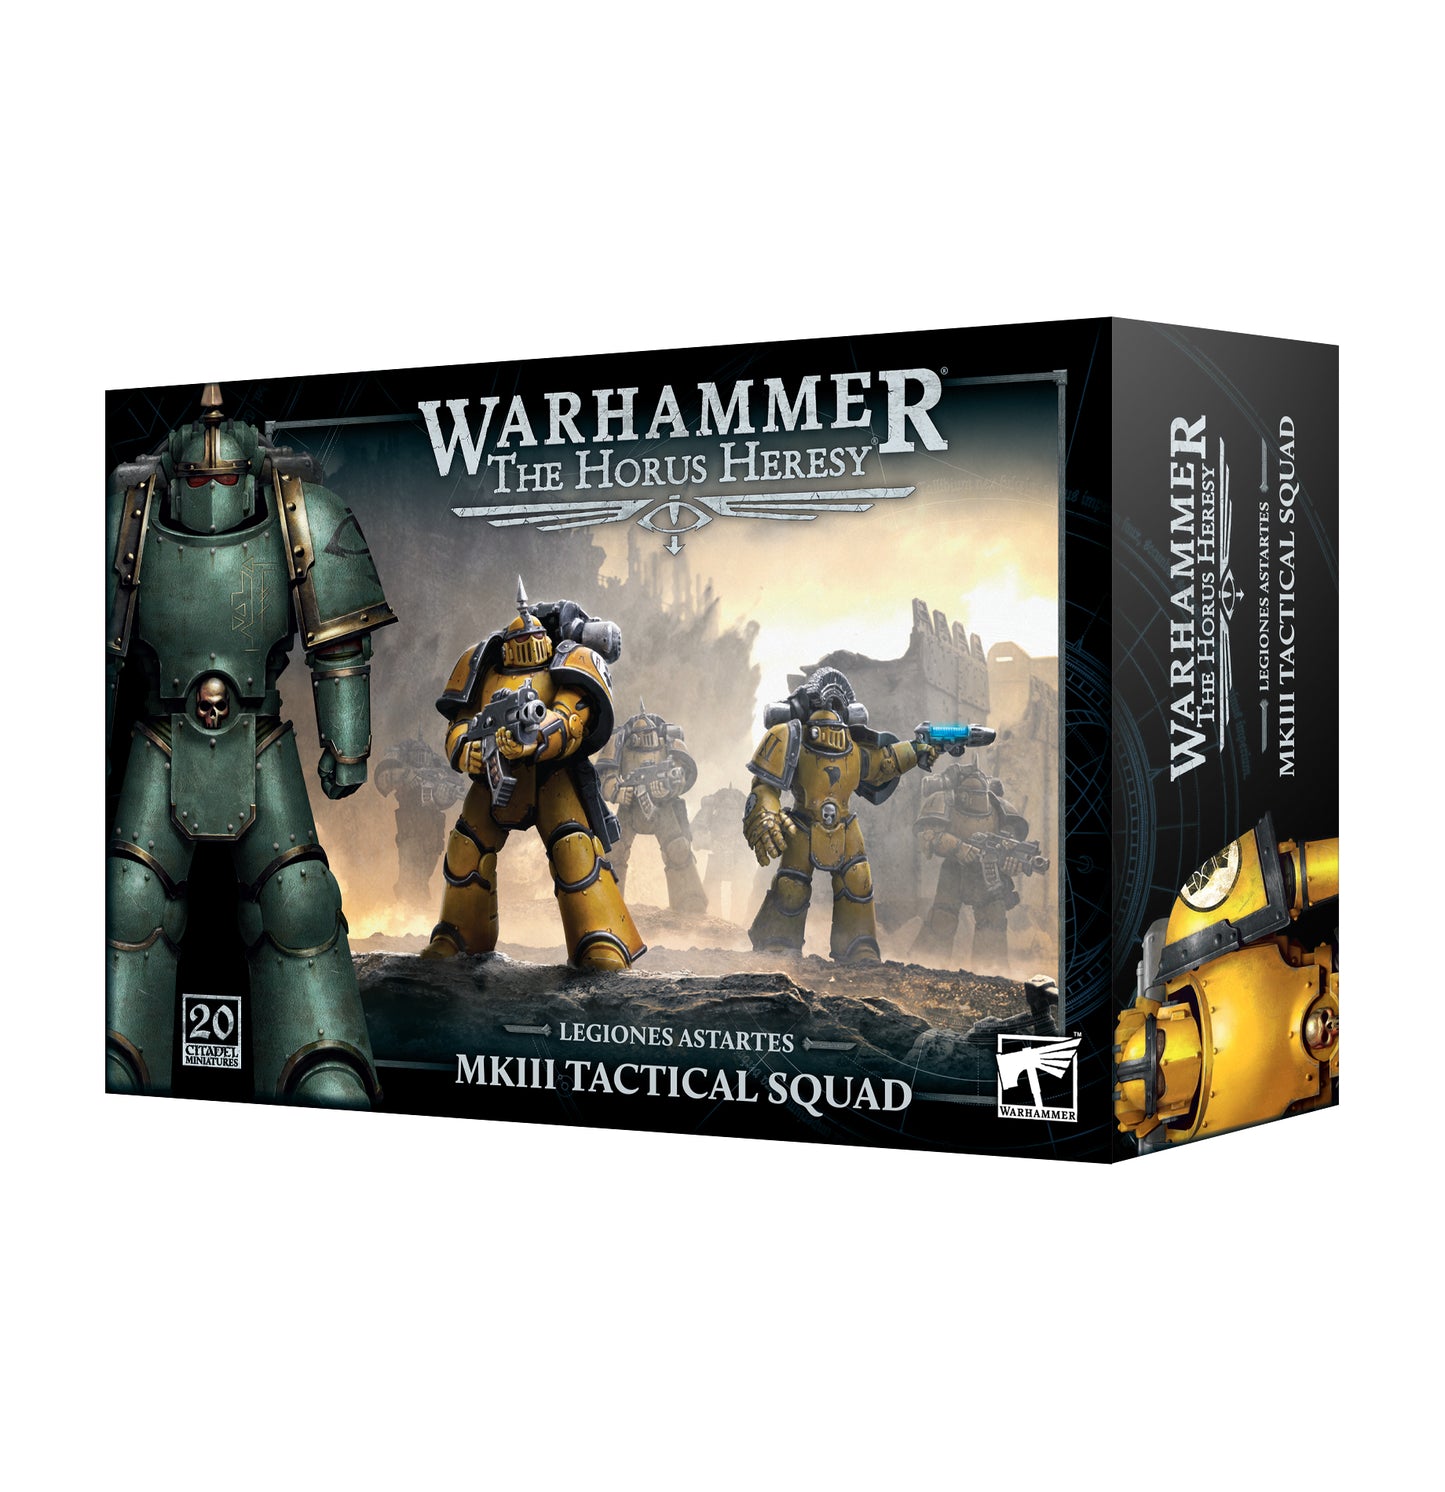 Warhammer: The Horus Heresy - Legiones Astartes - Mark III Tactical Squad